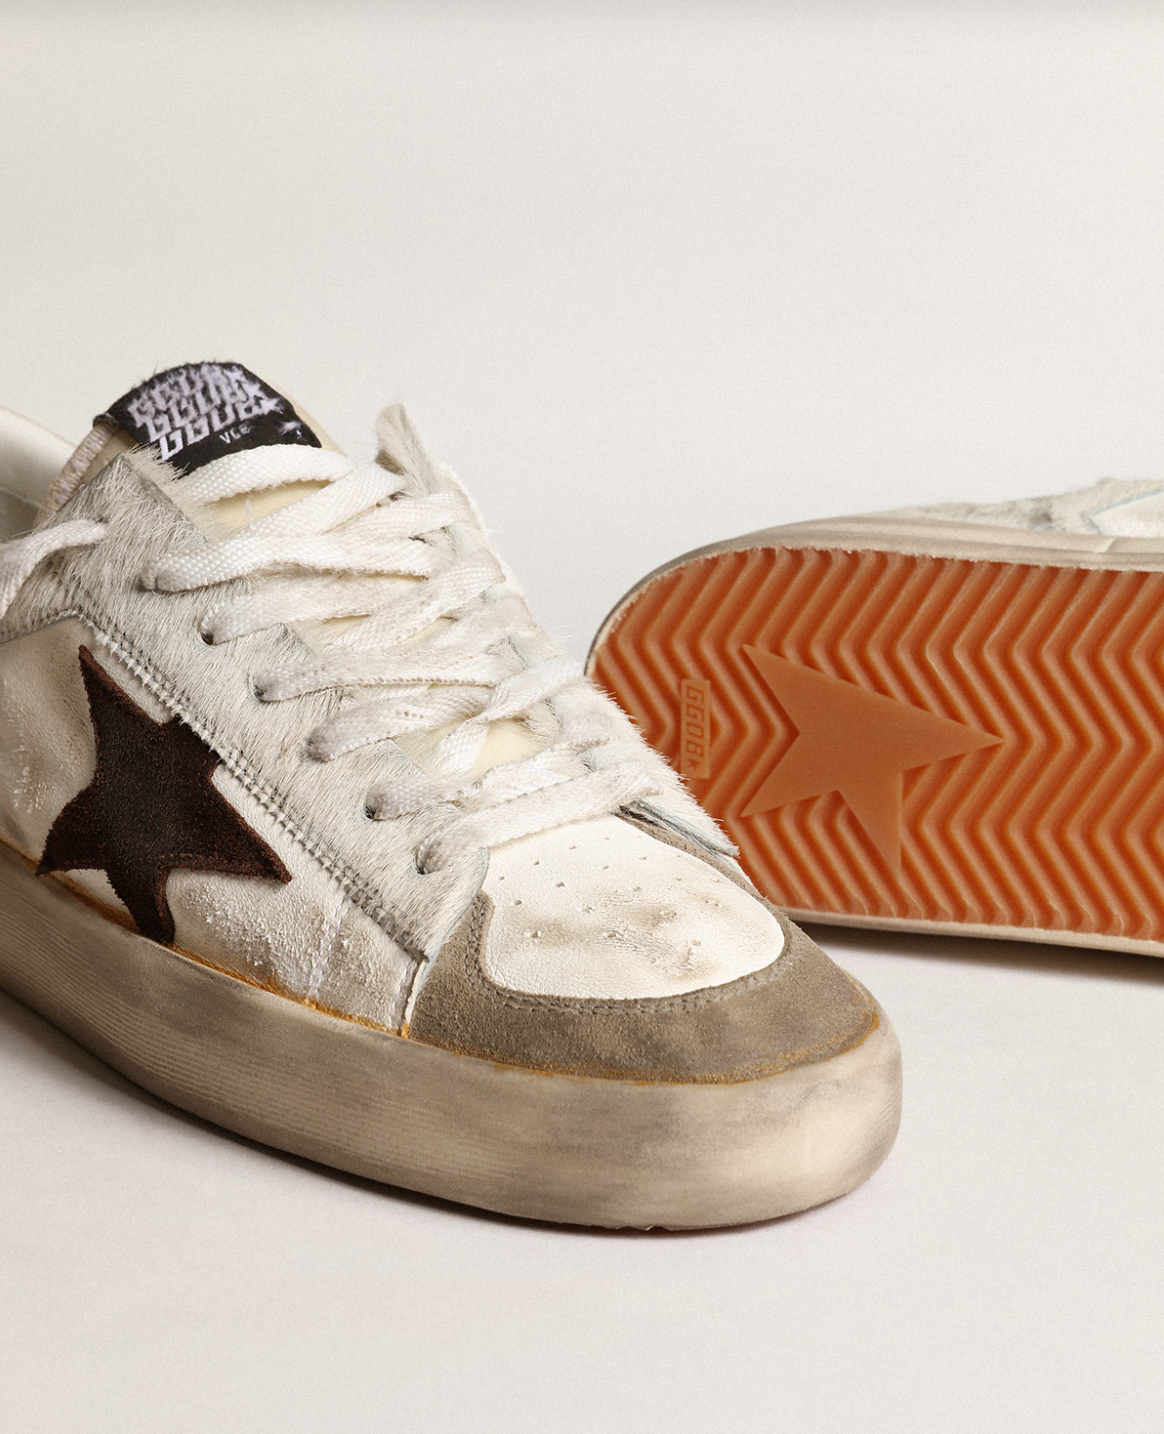 Men's Stardan Sneaker - White/Gray/Brown